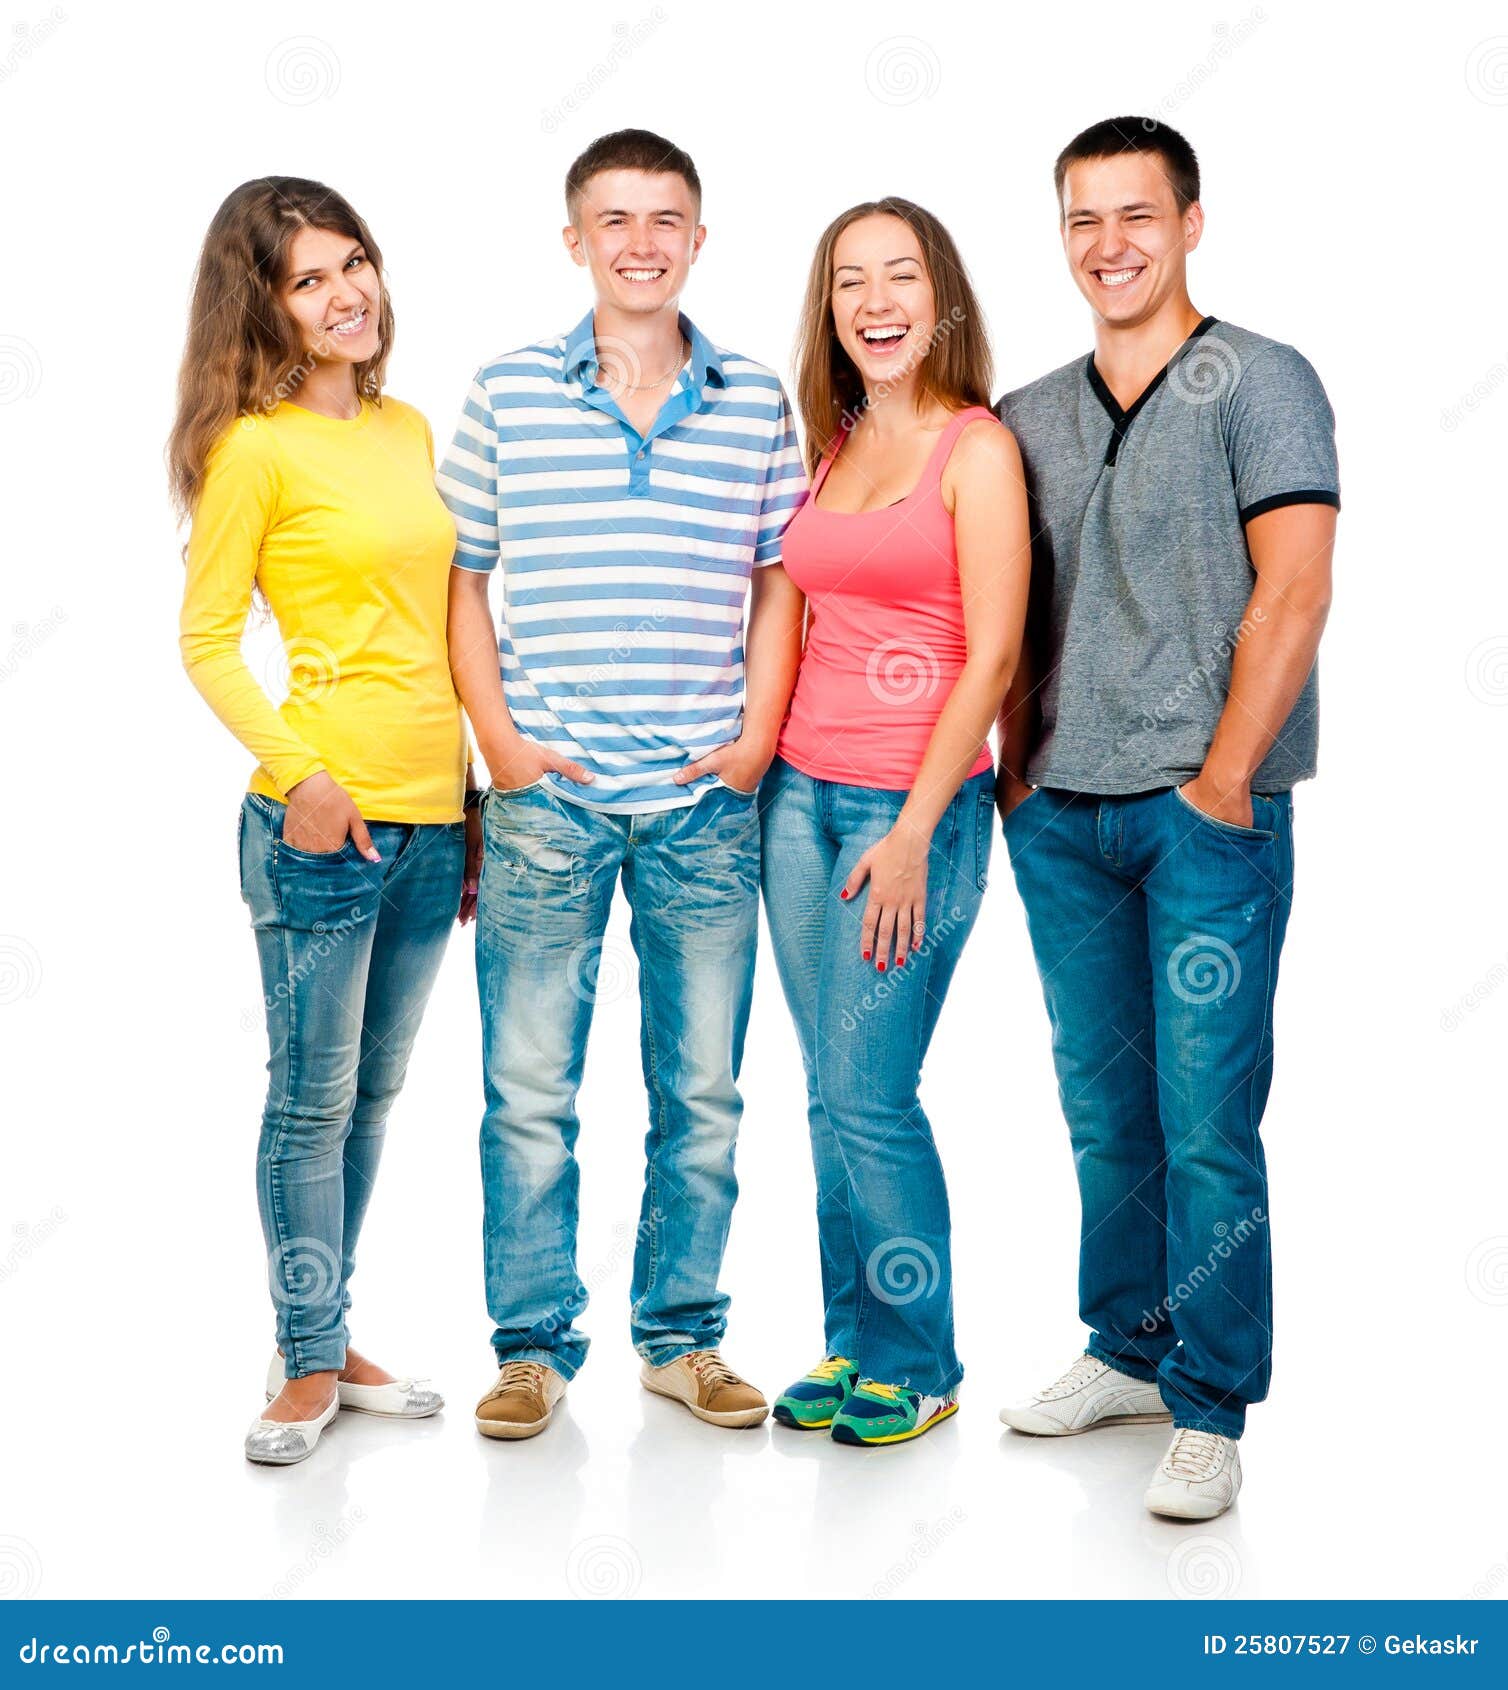 Group of young people stock image. Image of joyful, friendship - 25807527